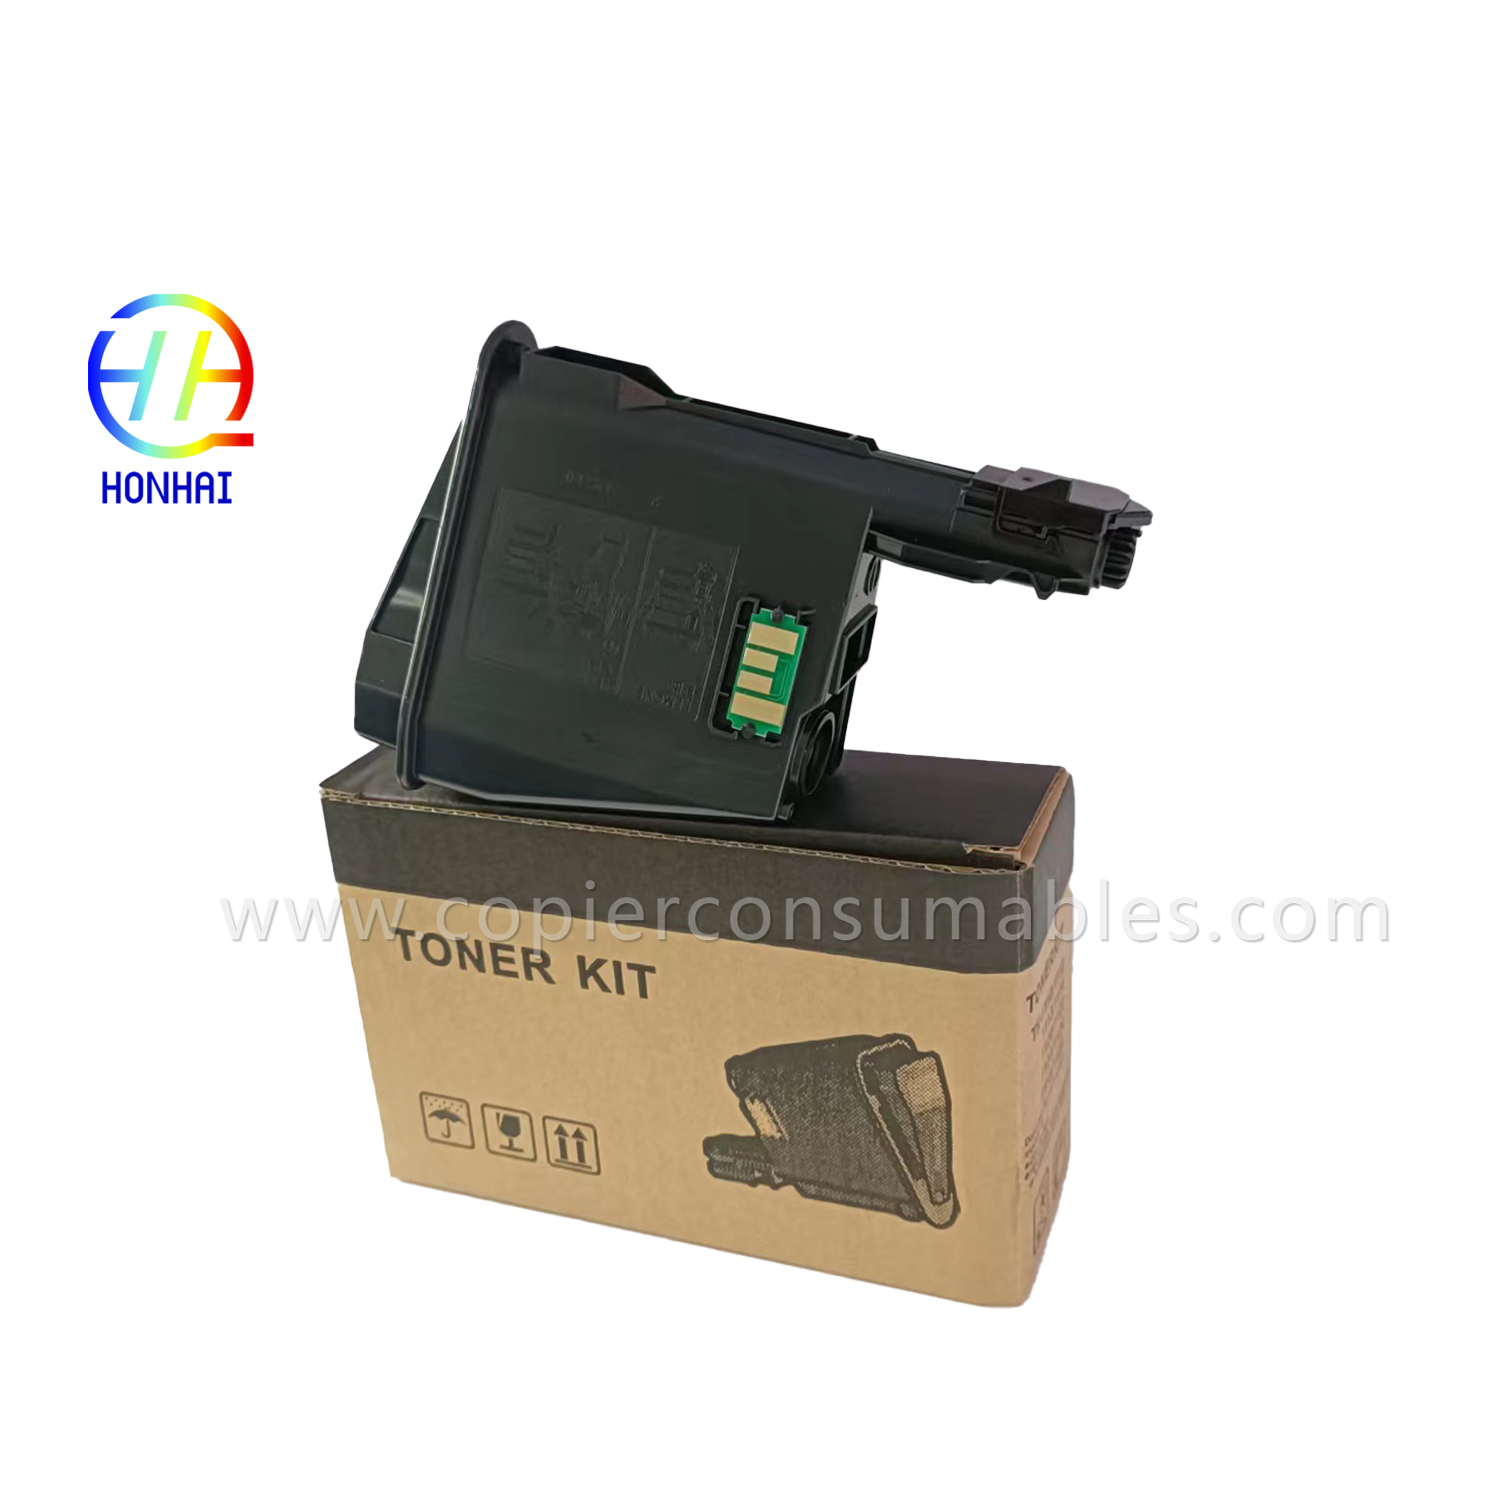 Toner Cartridge for Kyocera ECOSYS FS-1040 1060DN 1020MFP 1041 1120MFP 1025MFP 1061DN